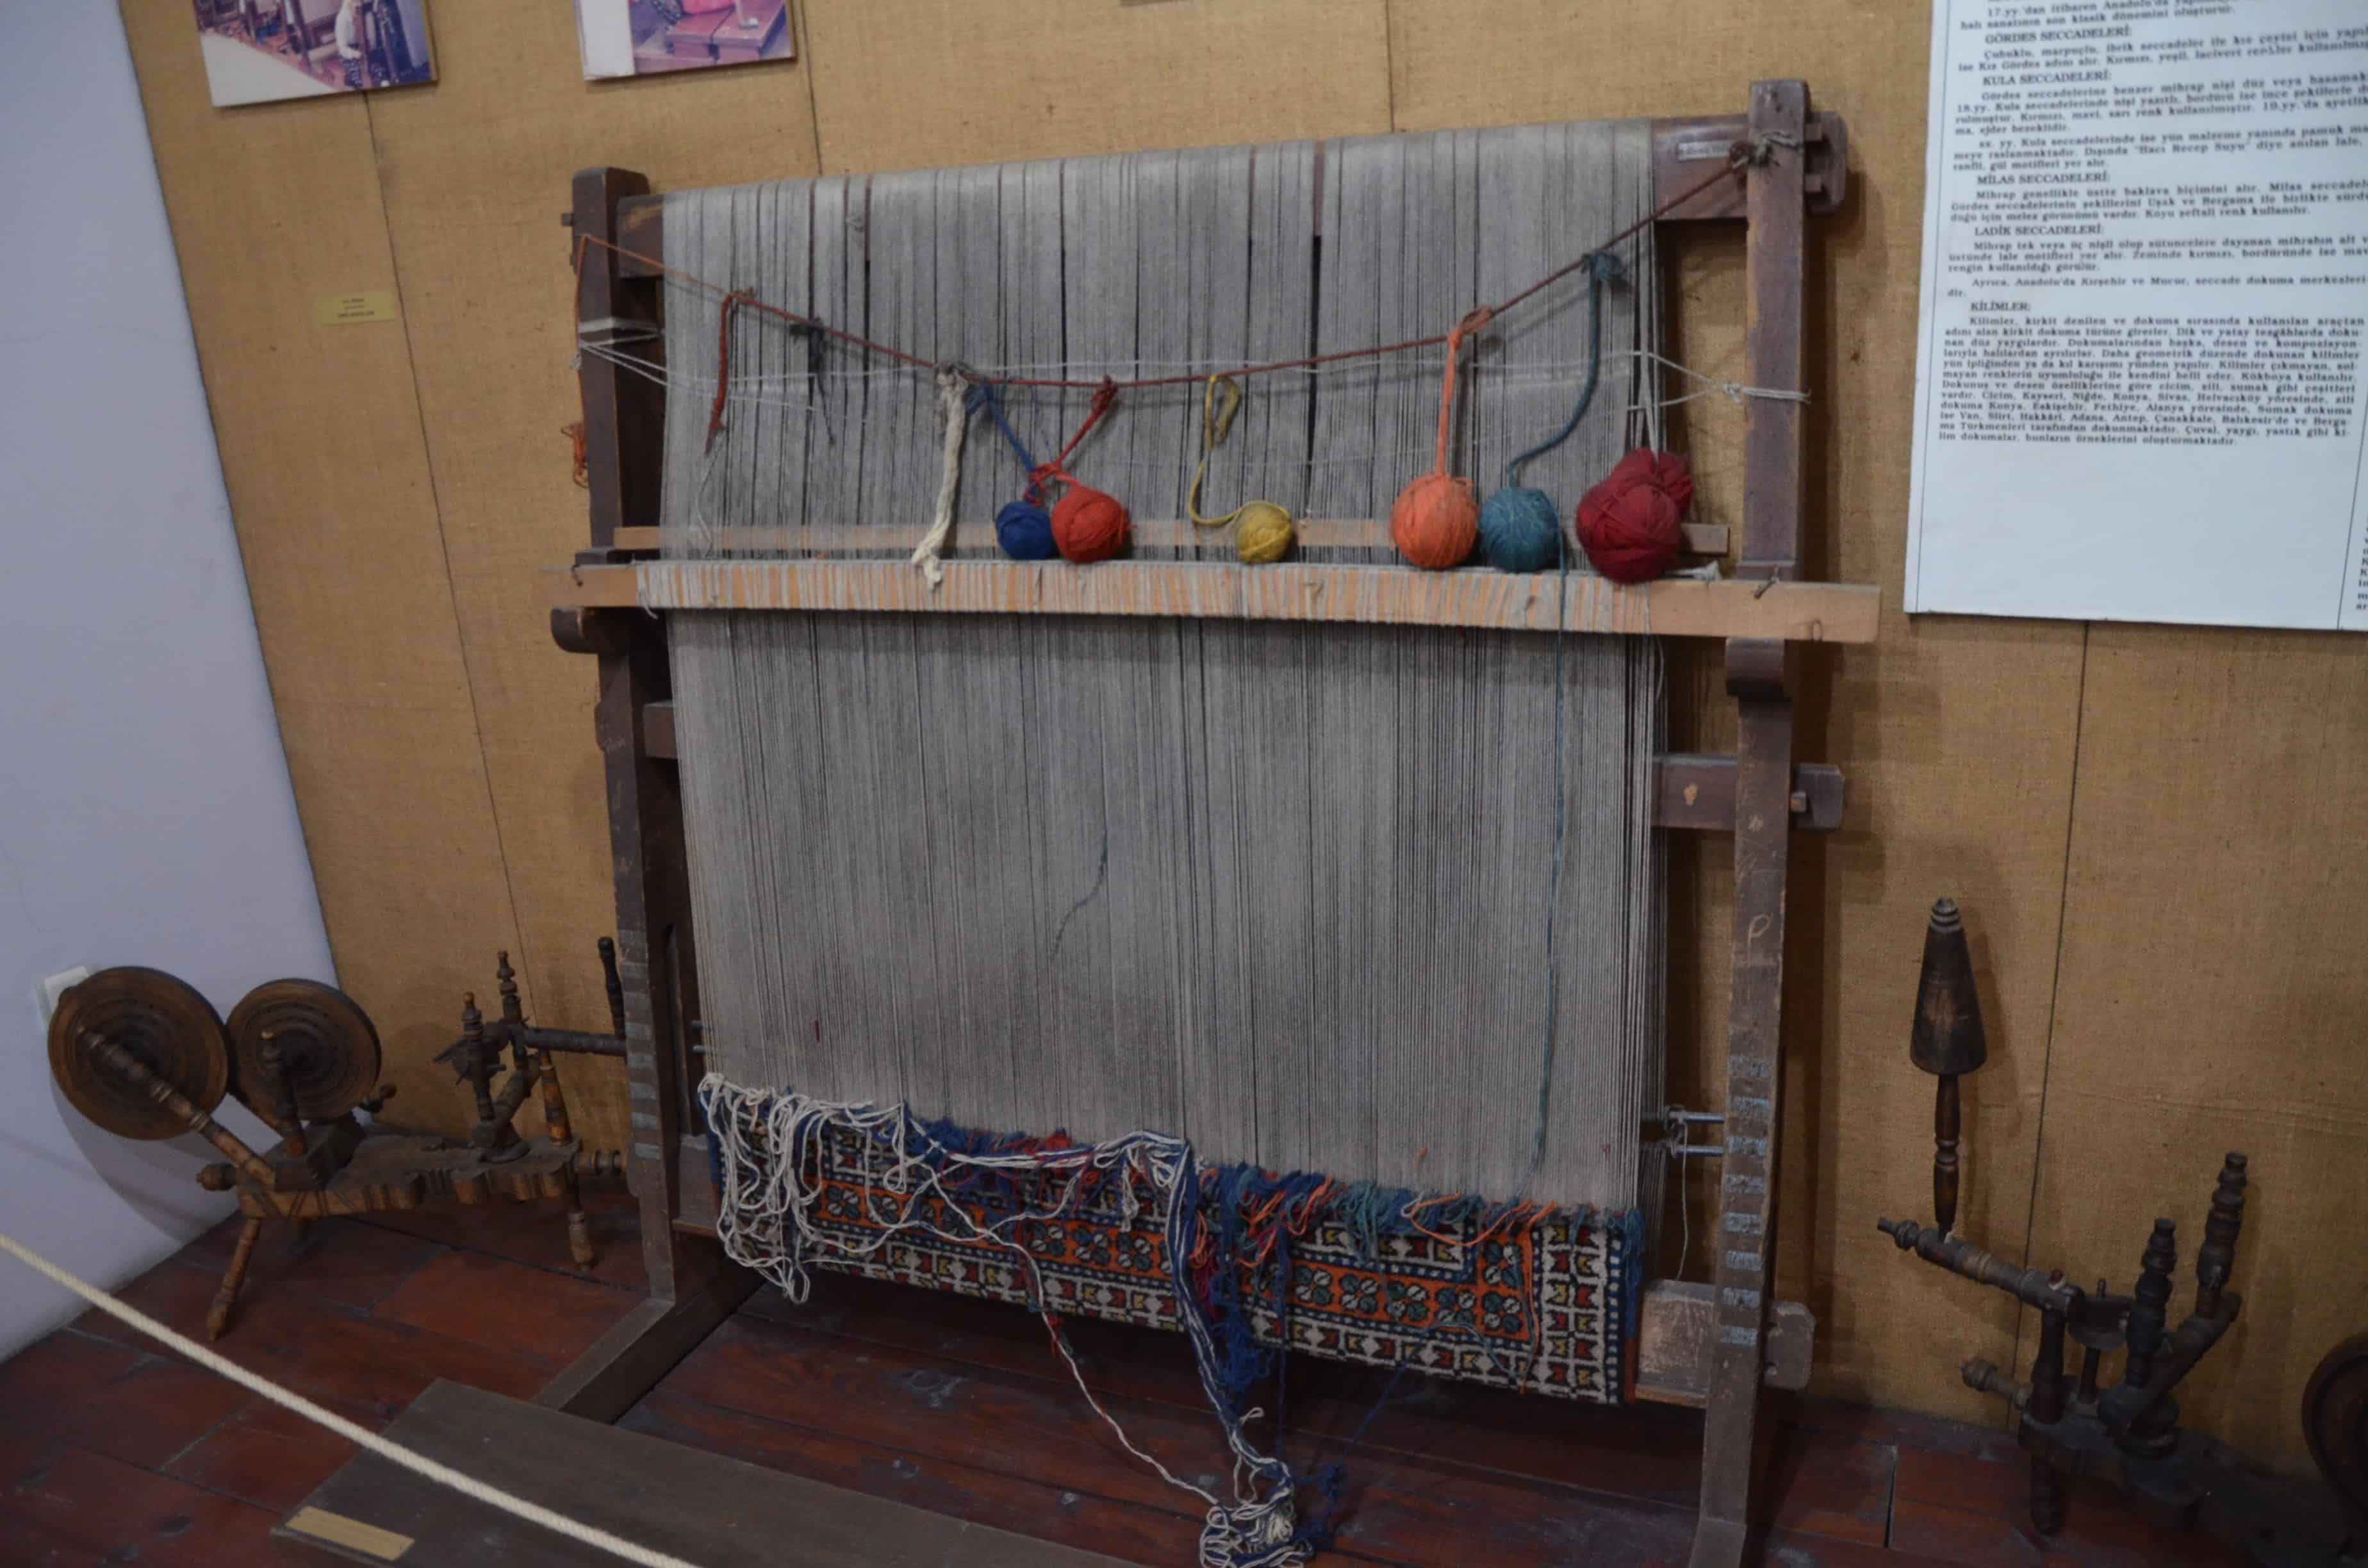 Loom at the Izmir Ethnography Museum in Izmir, Turkey